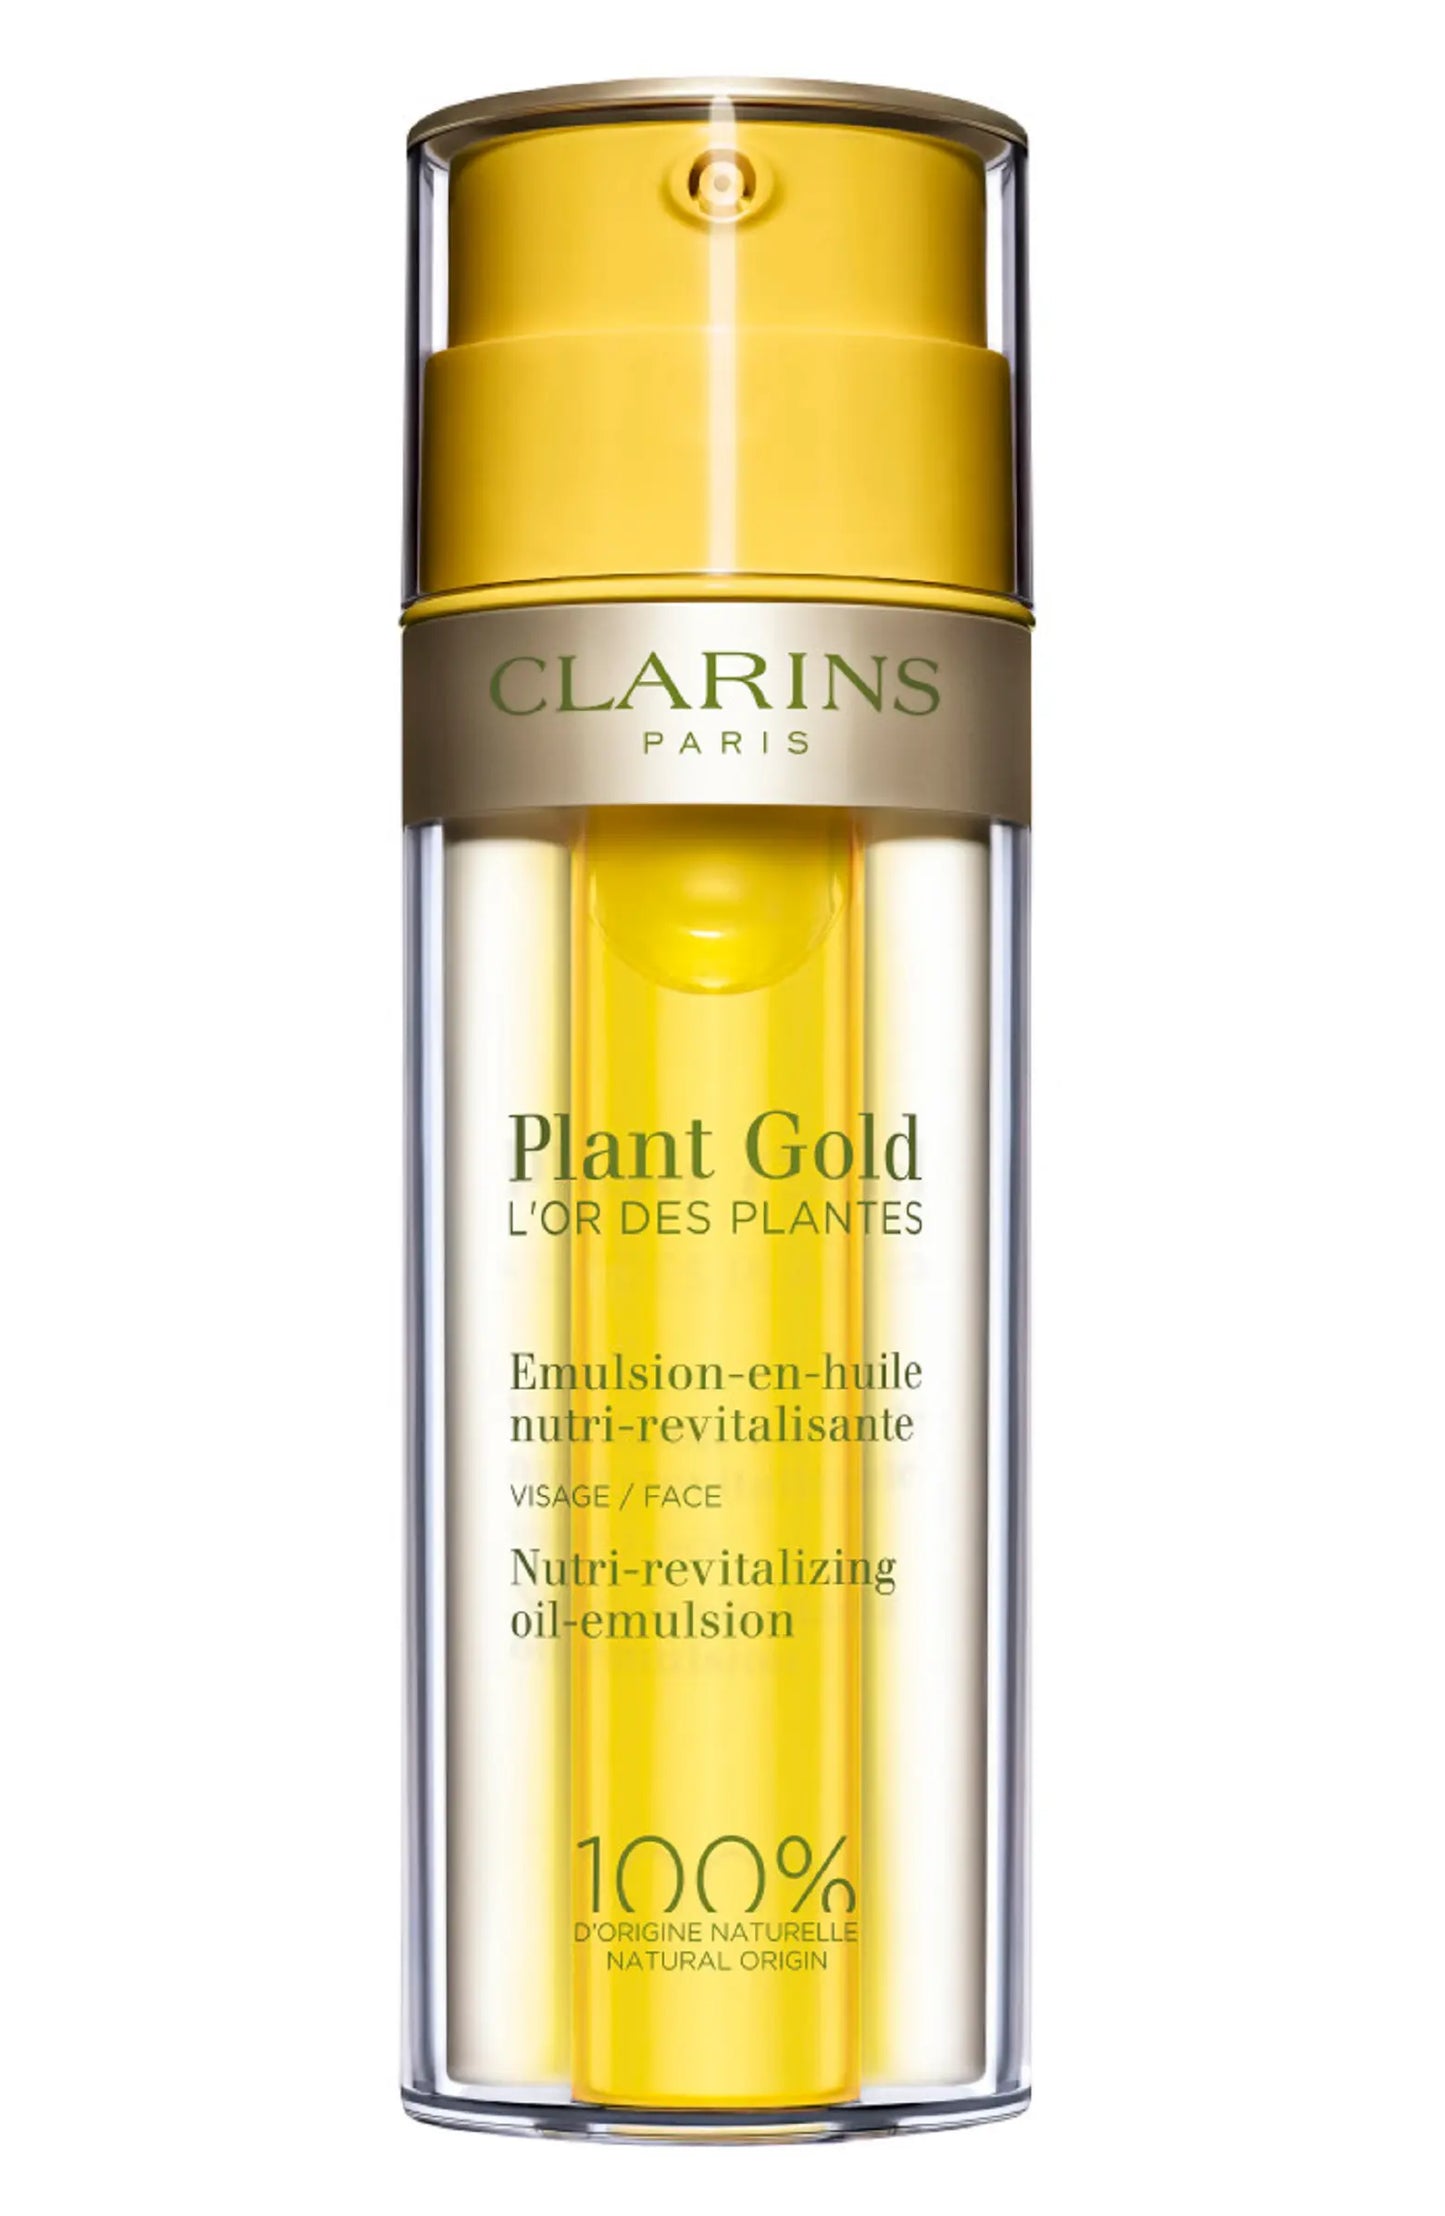 Clarins Plant Gold Nutri-Revitalizing Oil-Emulsion